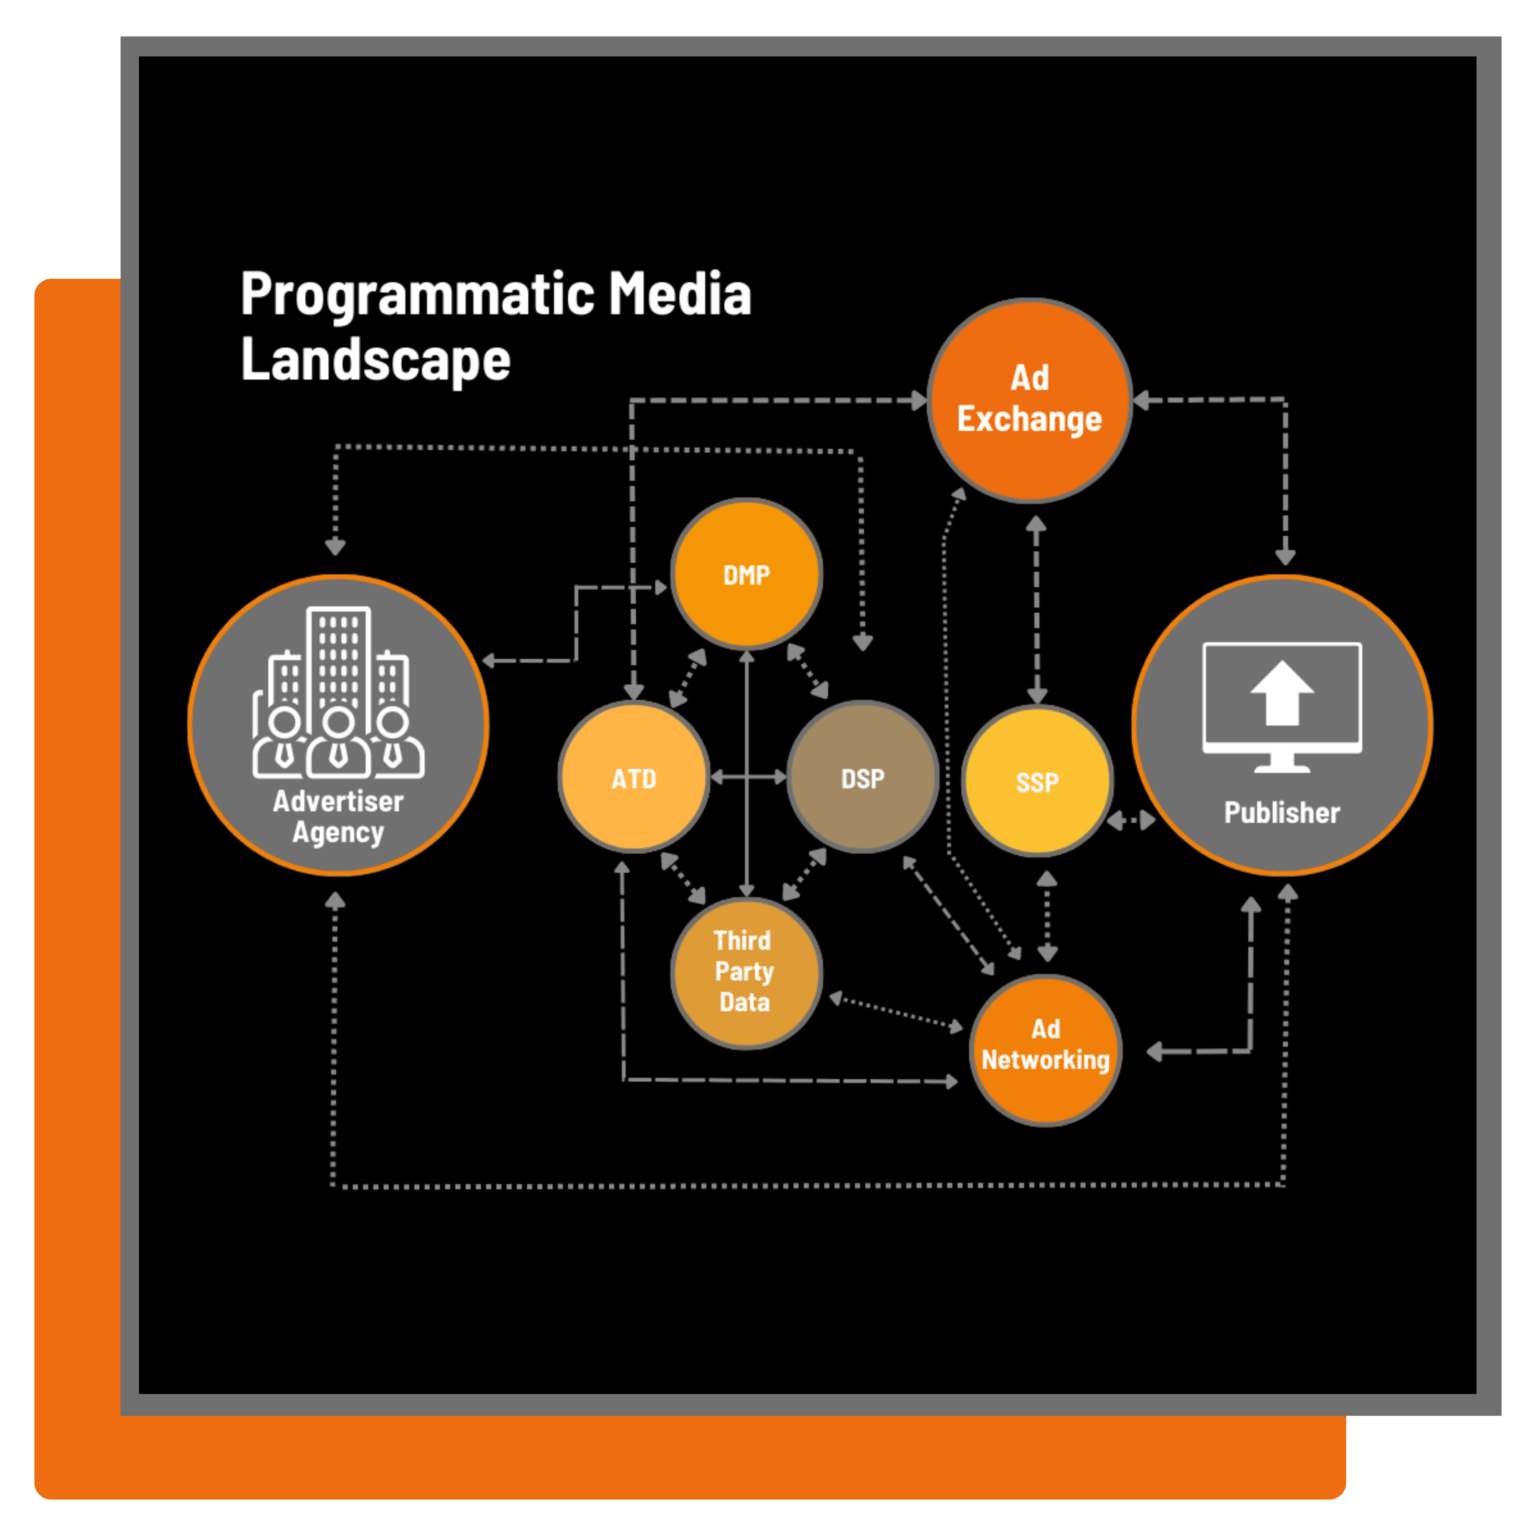 Programmatic Media Landscape chart